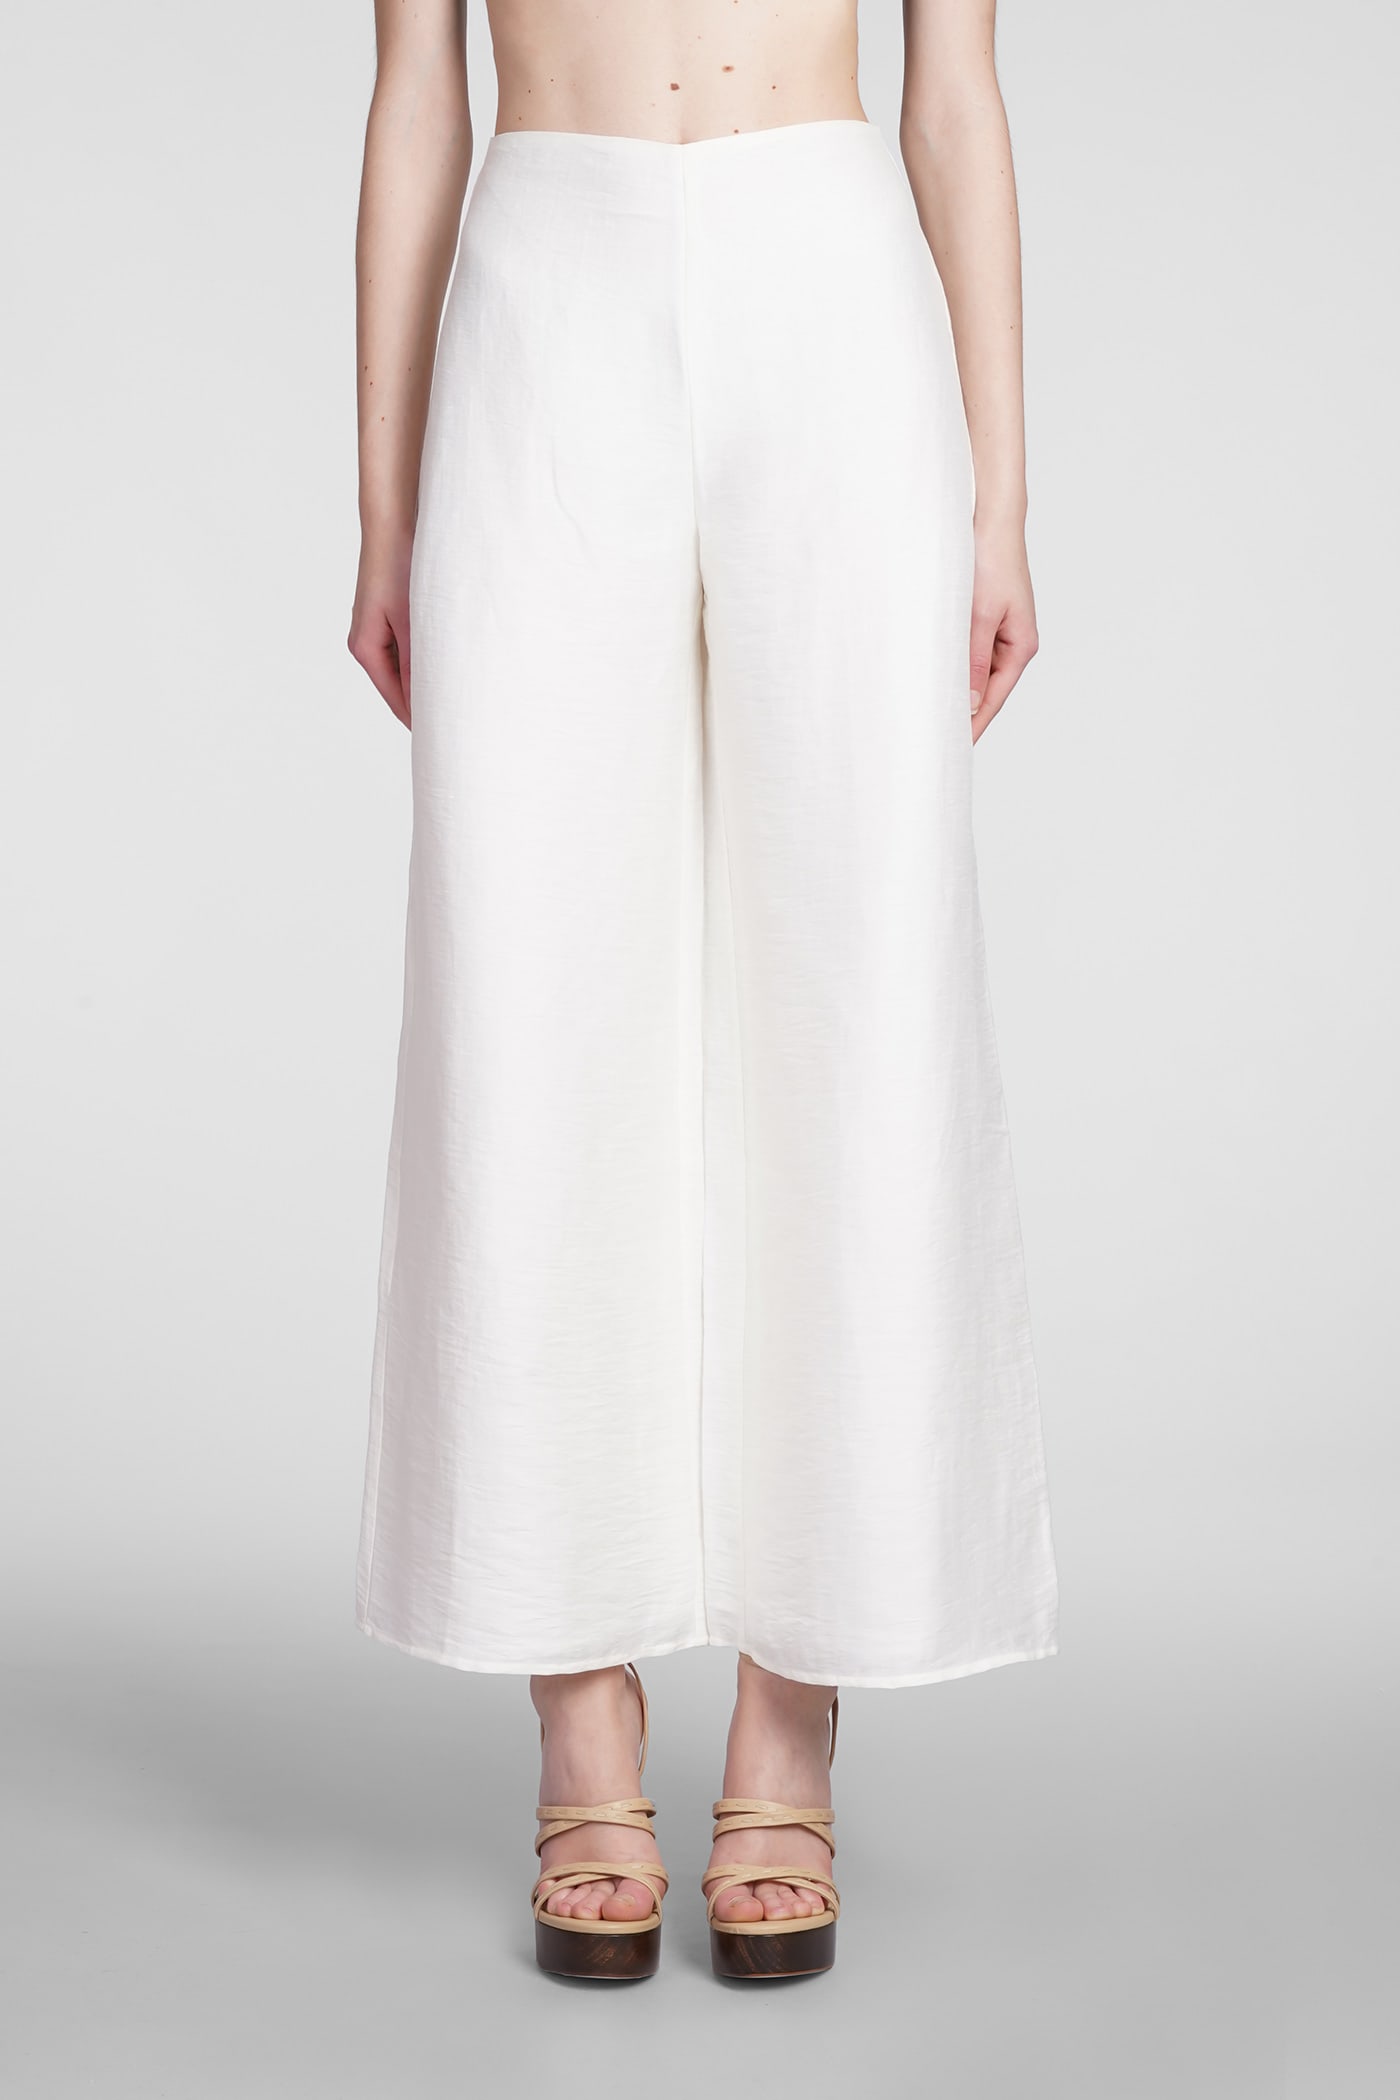 Cult Gaia Kora Pants In White Linen